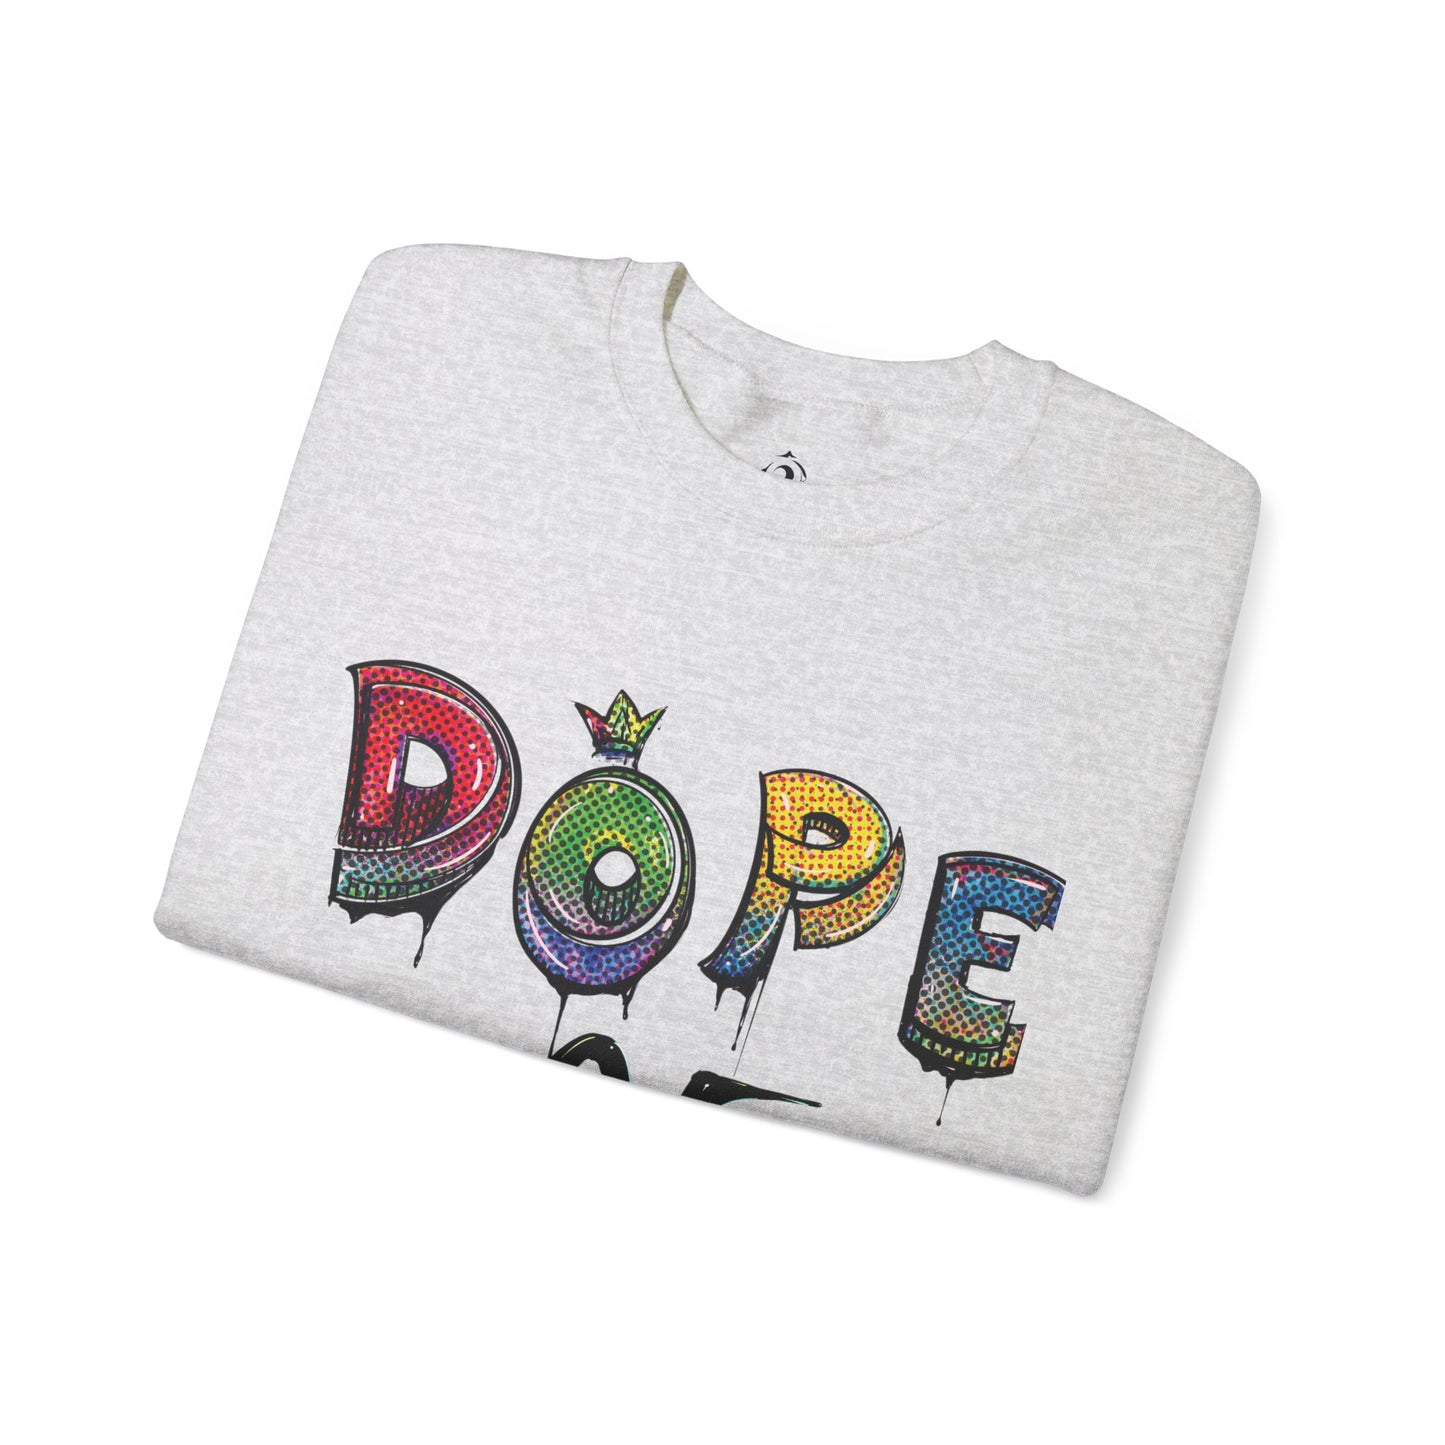 Dope AF | Graphic Sweatshirt